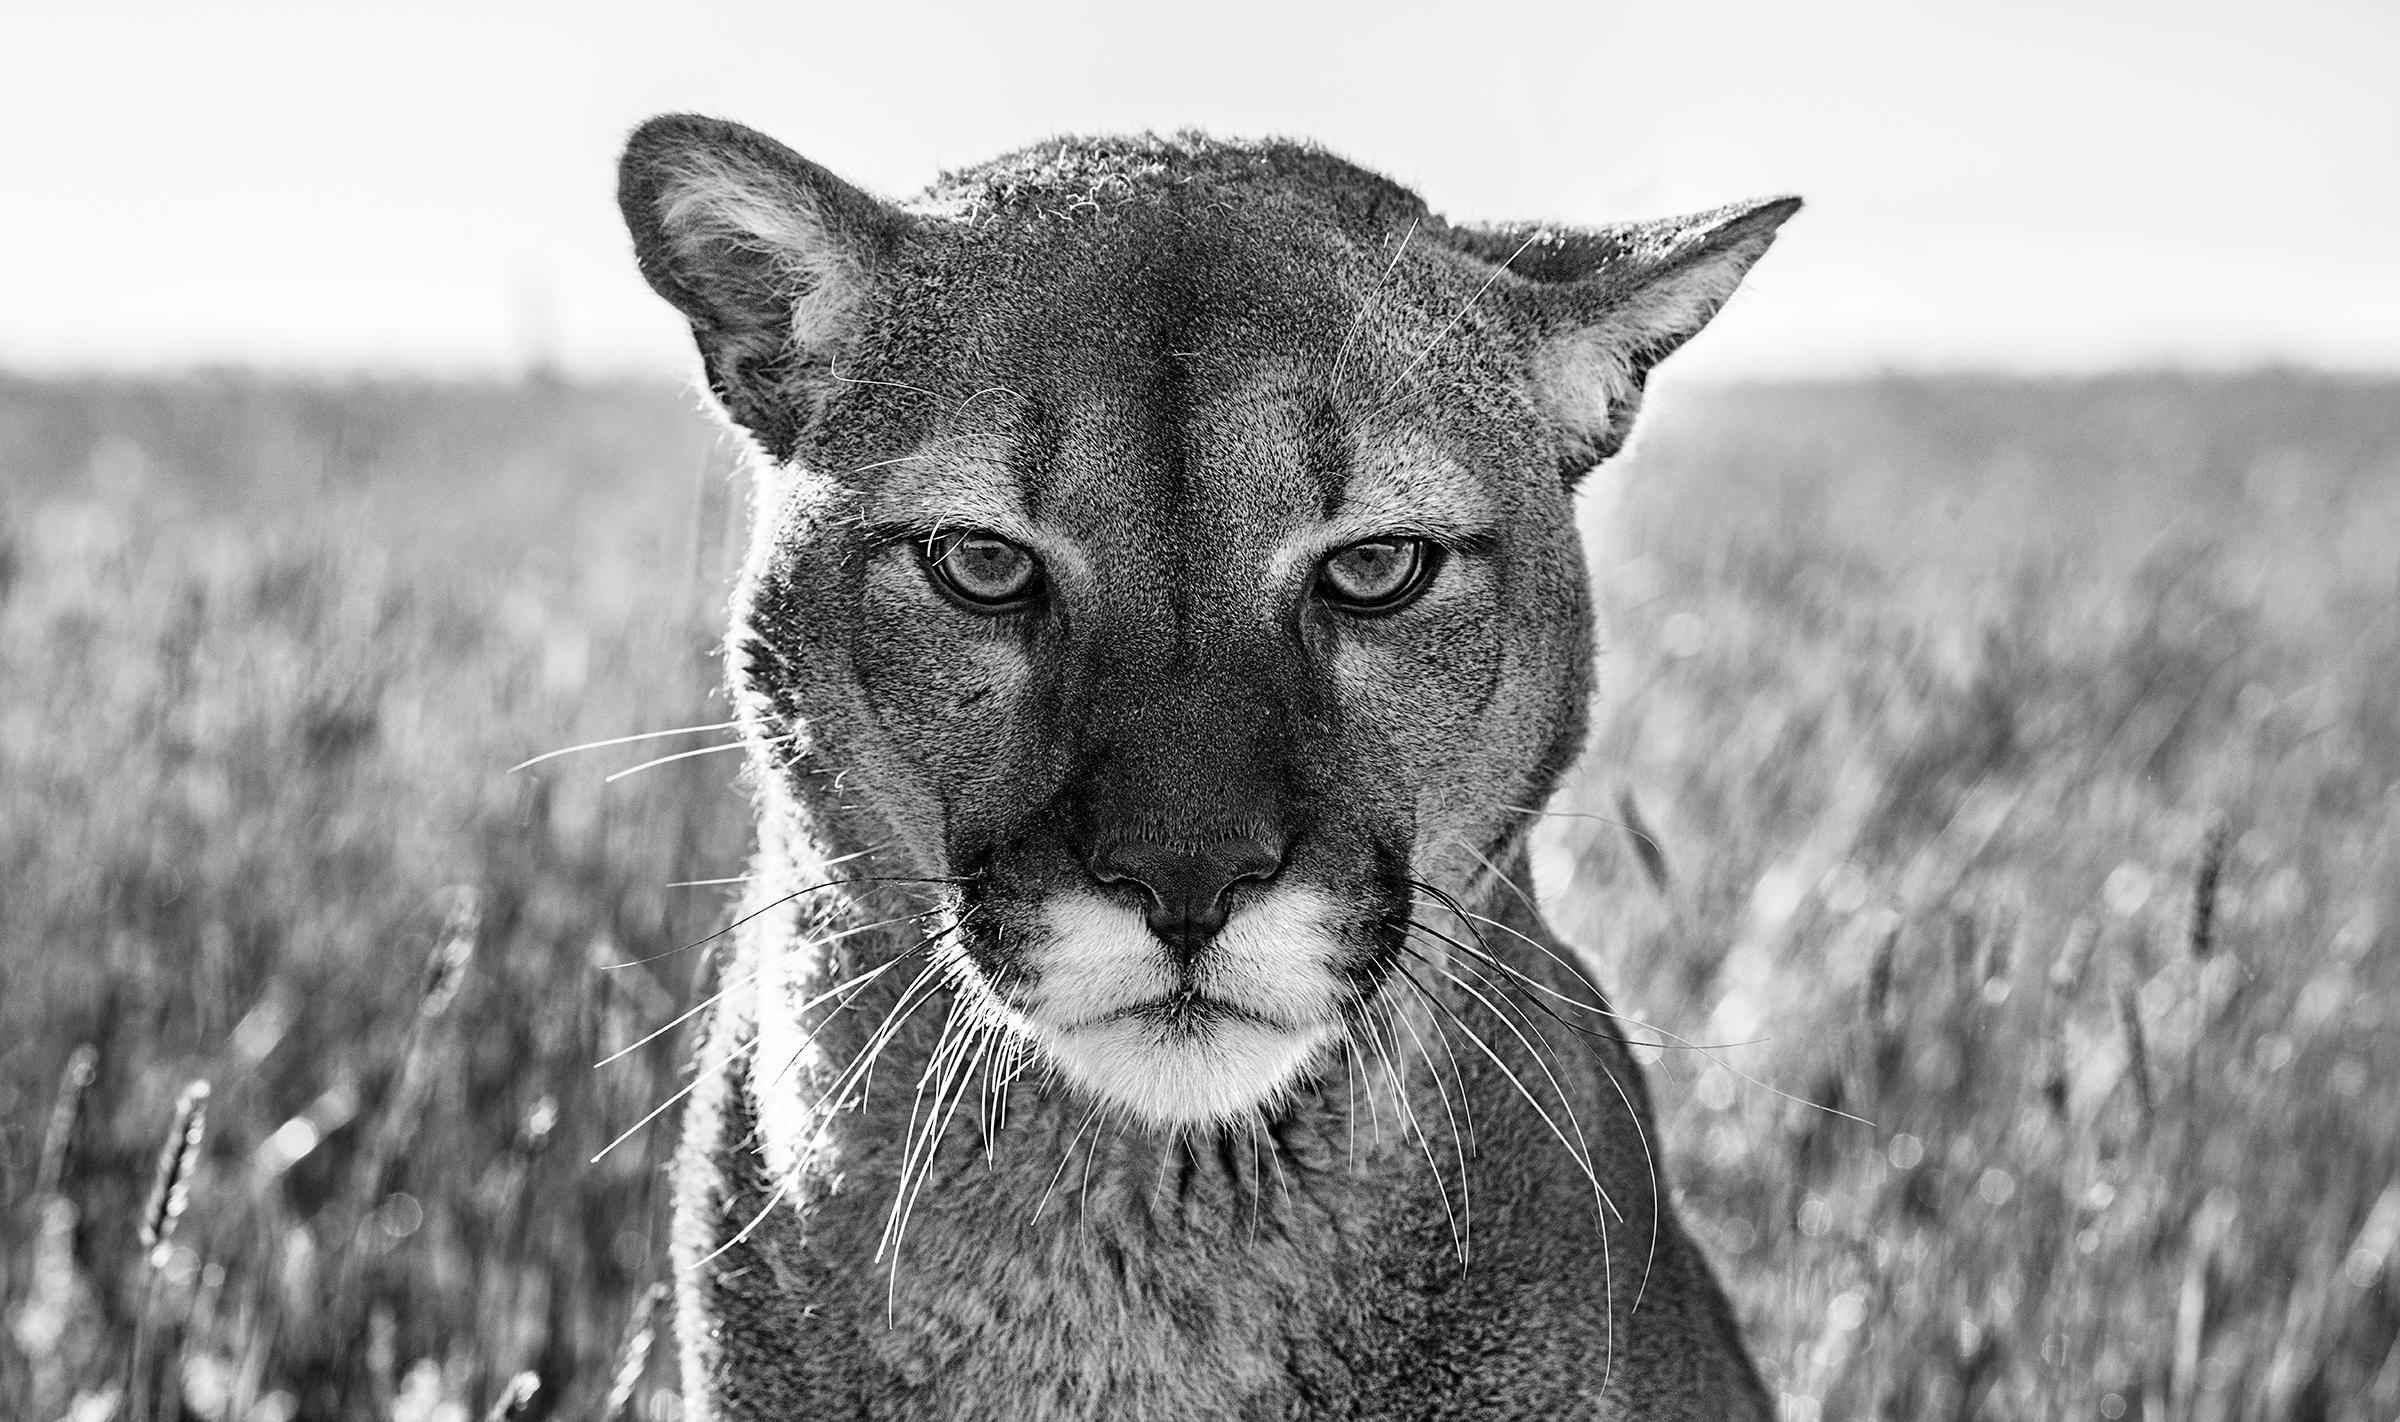 David Yarrow Black and White Photograph - Smokey the Mountain Lion